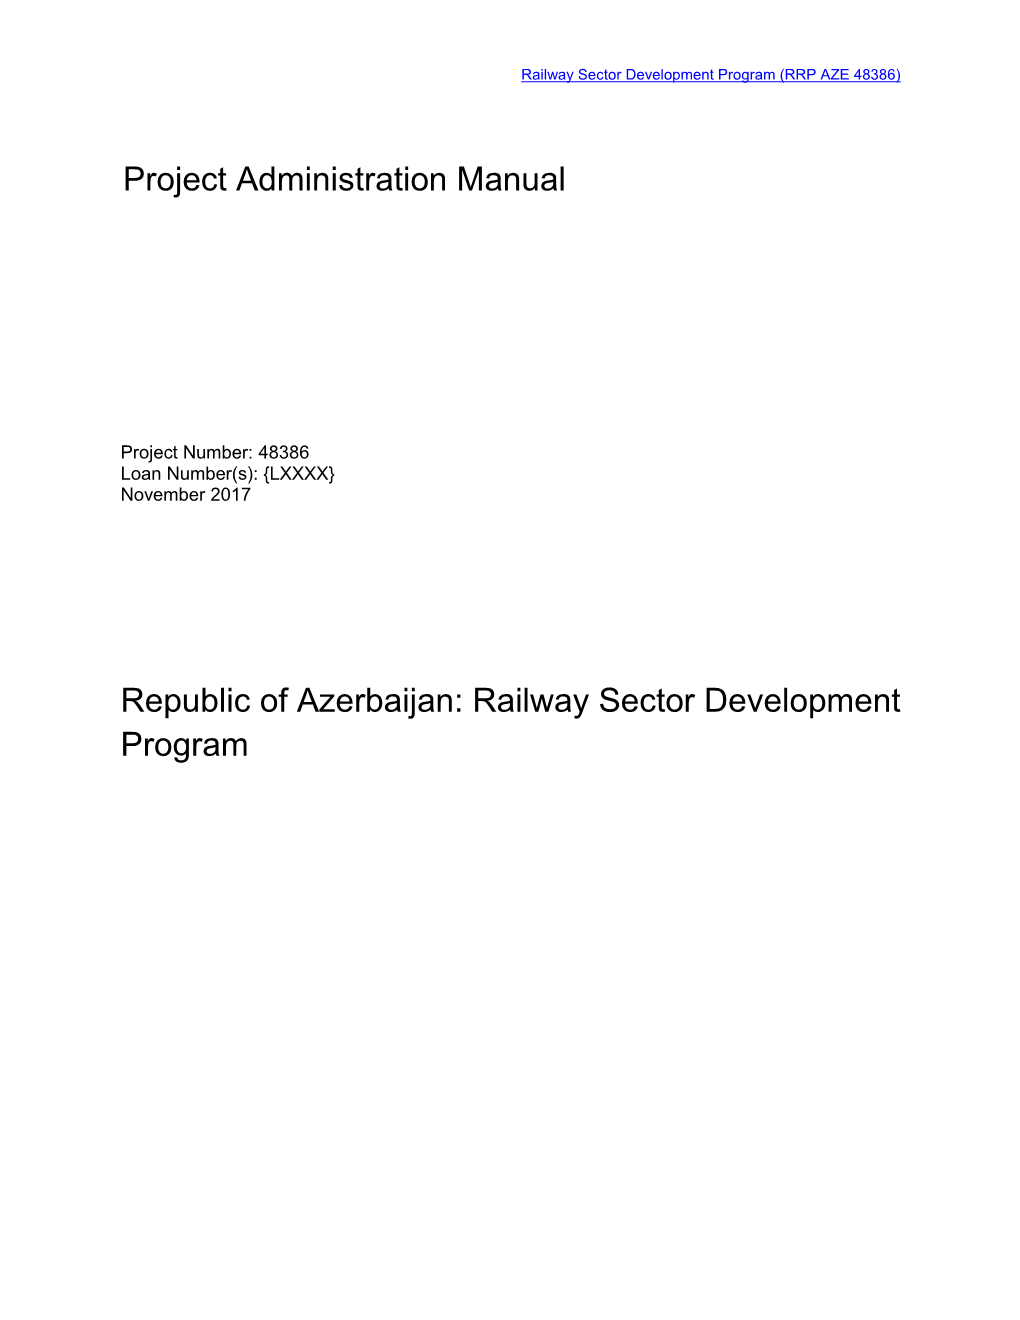 Republic of Azerbaijan: Railway Sector Development Program